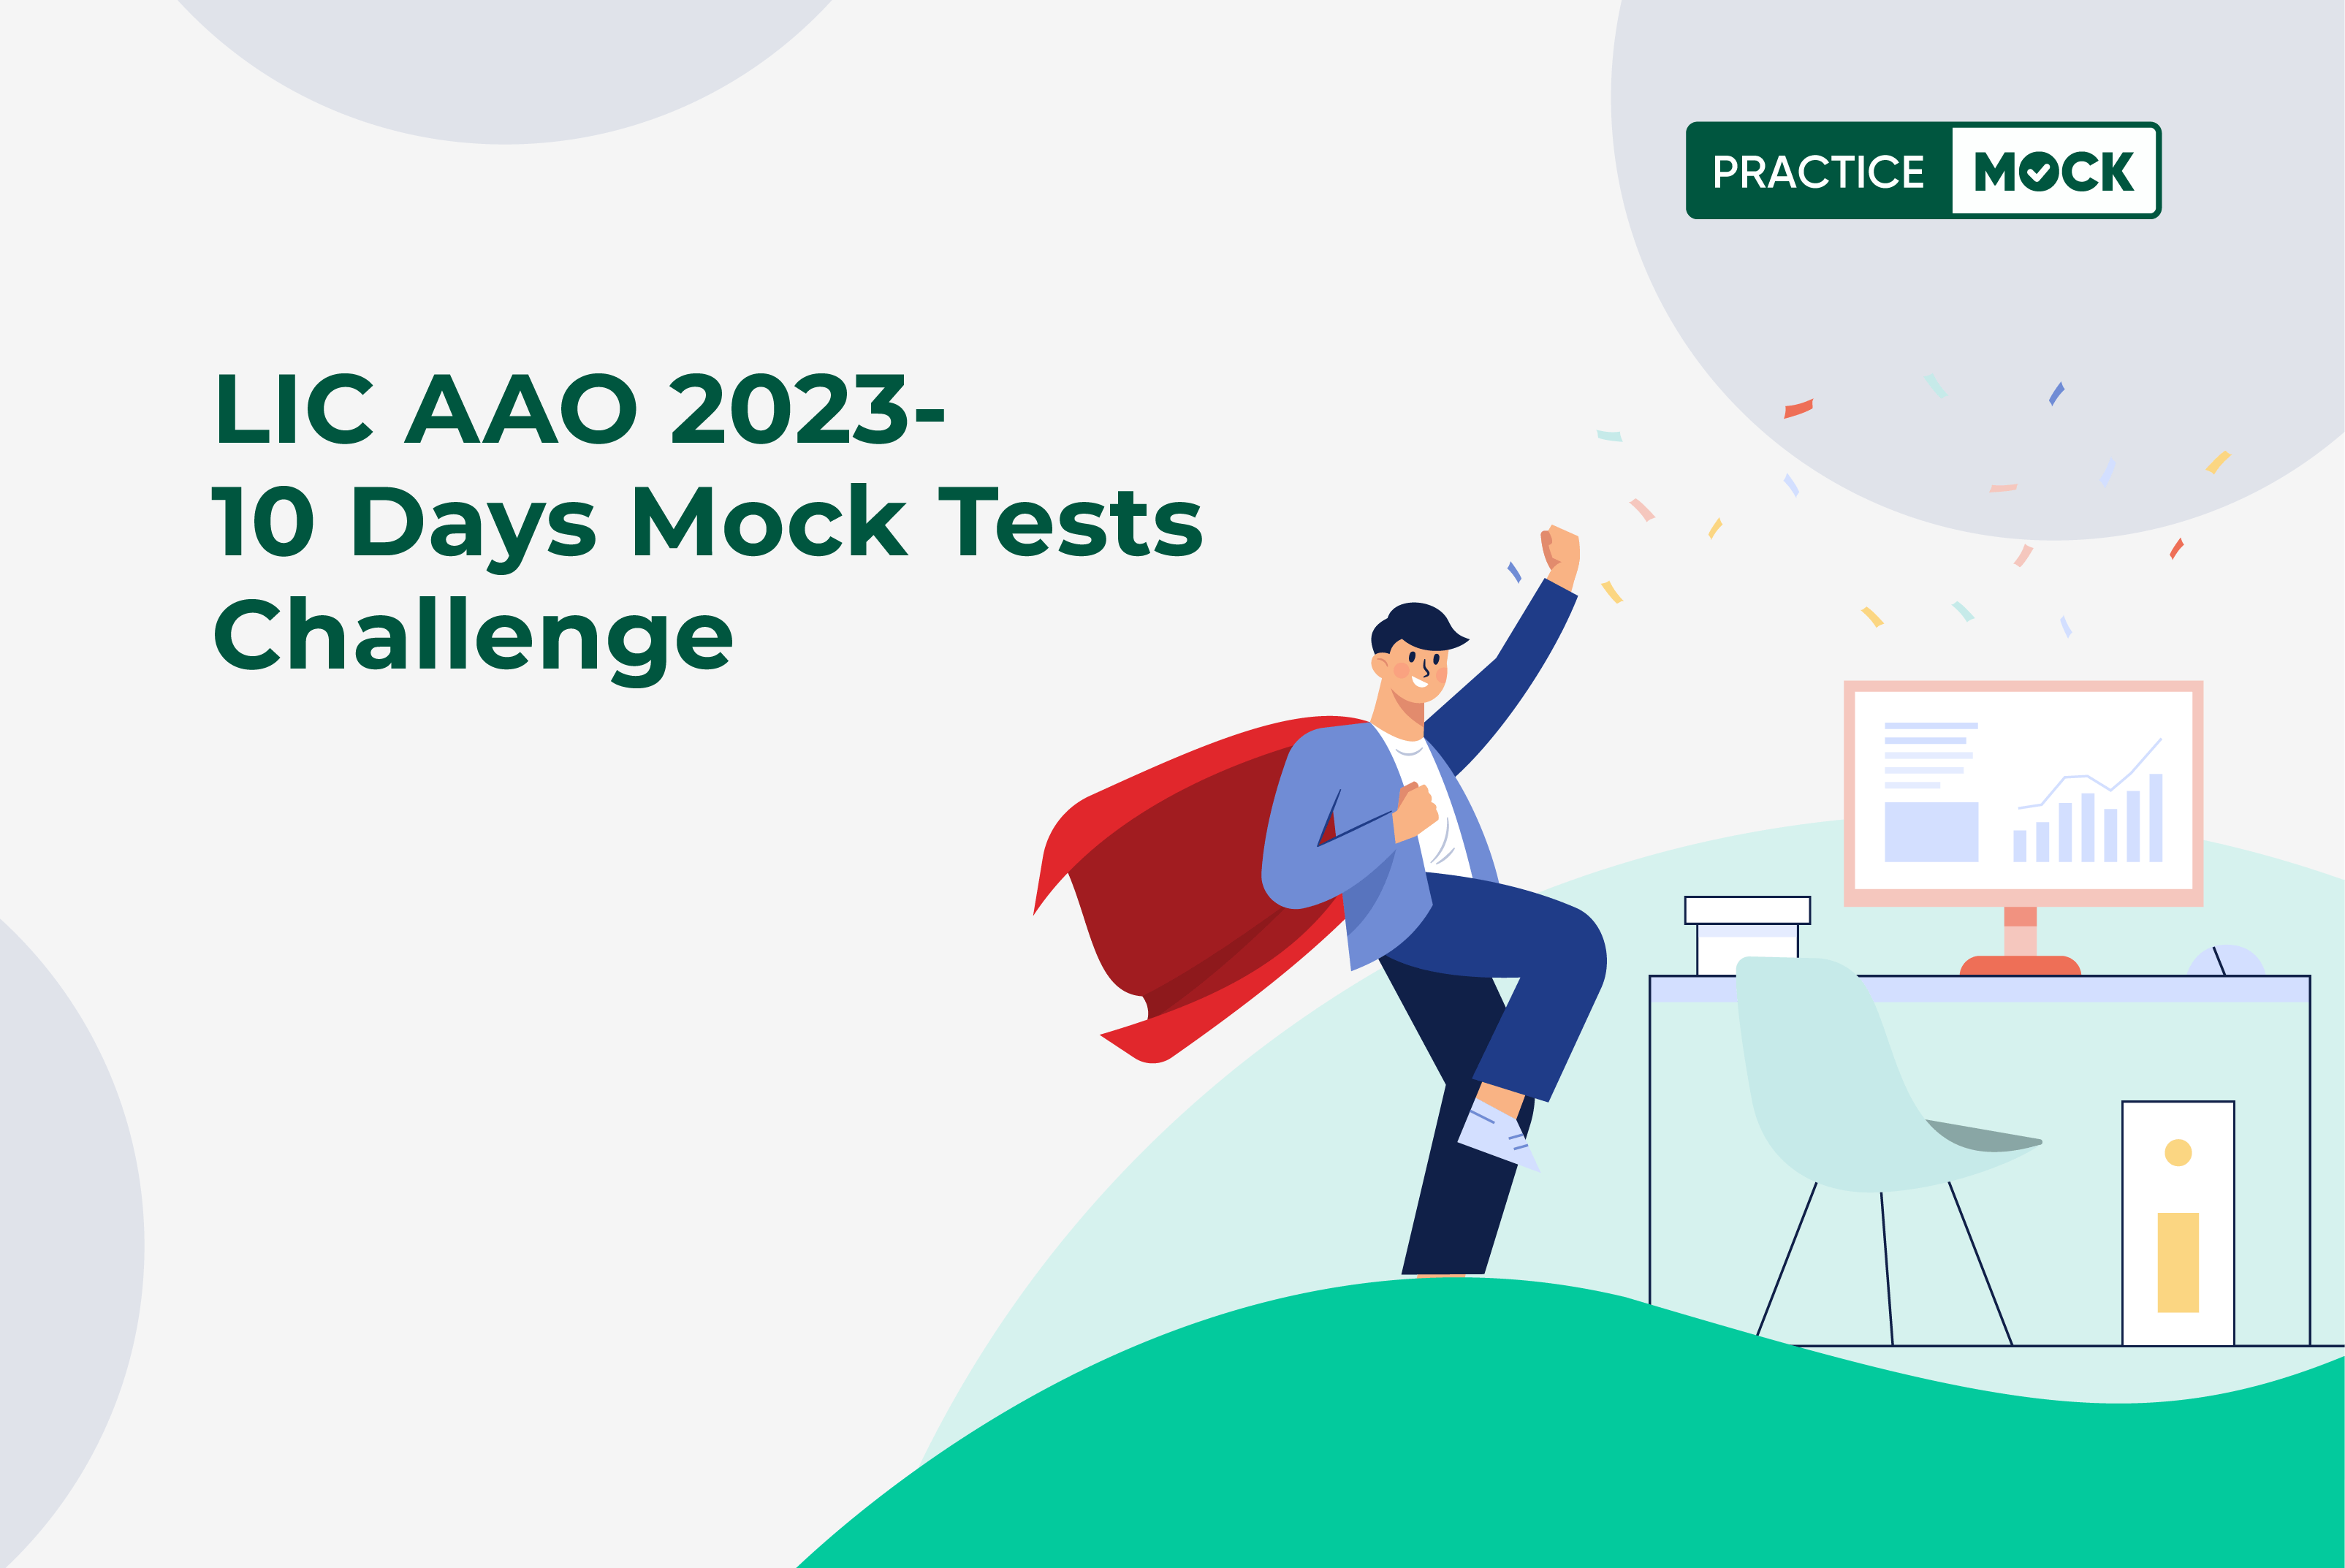 LIC AAO 2023-10 Days Mock Tests Challenge